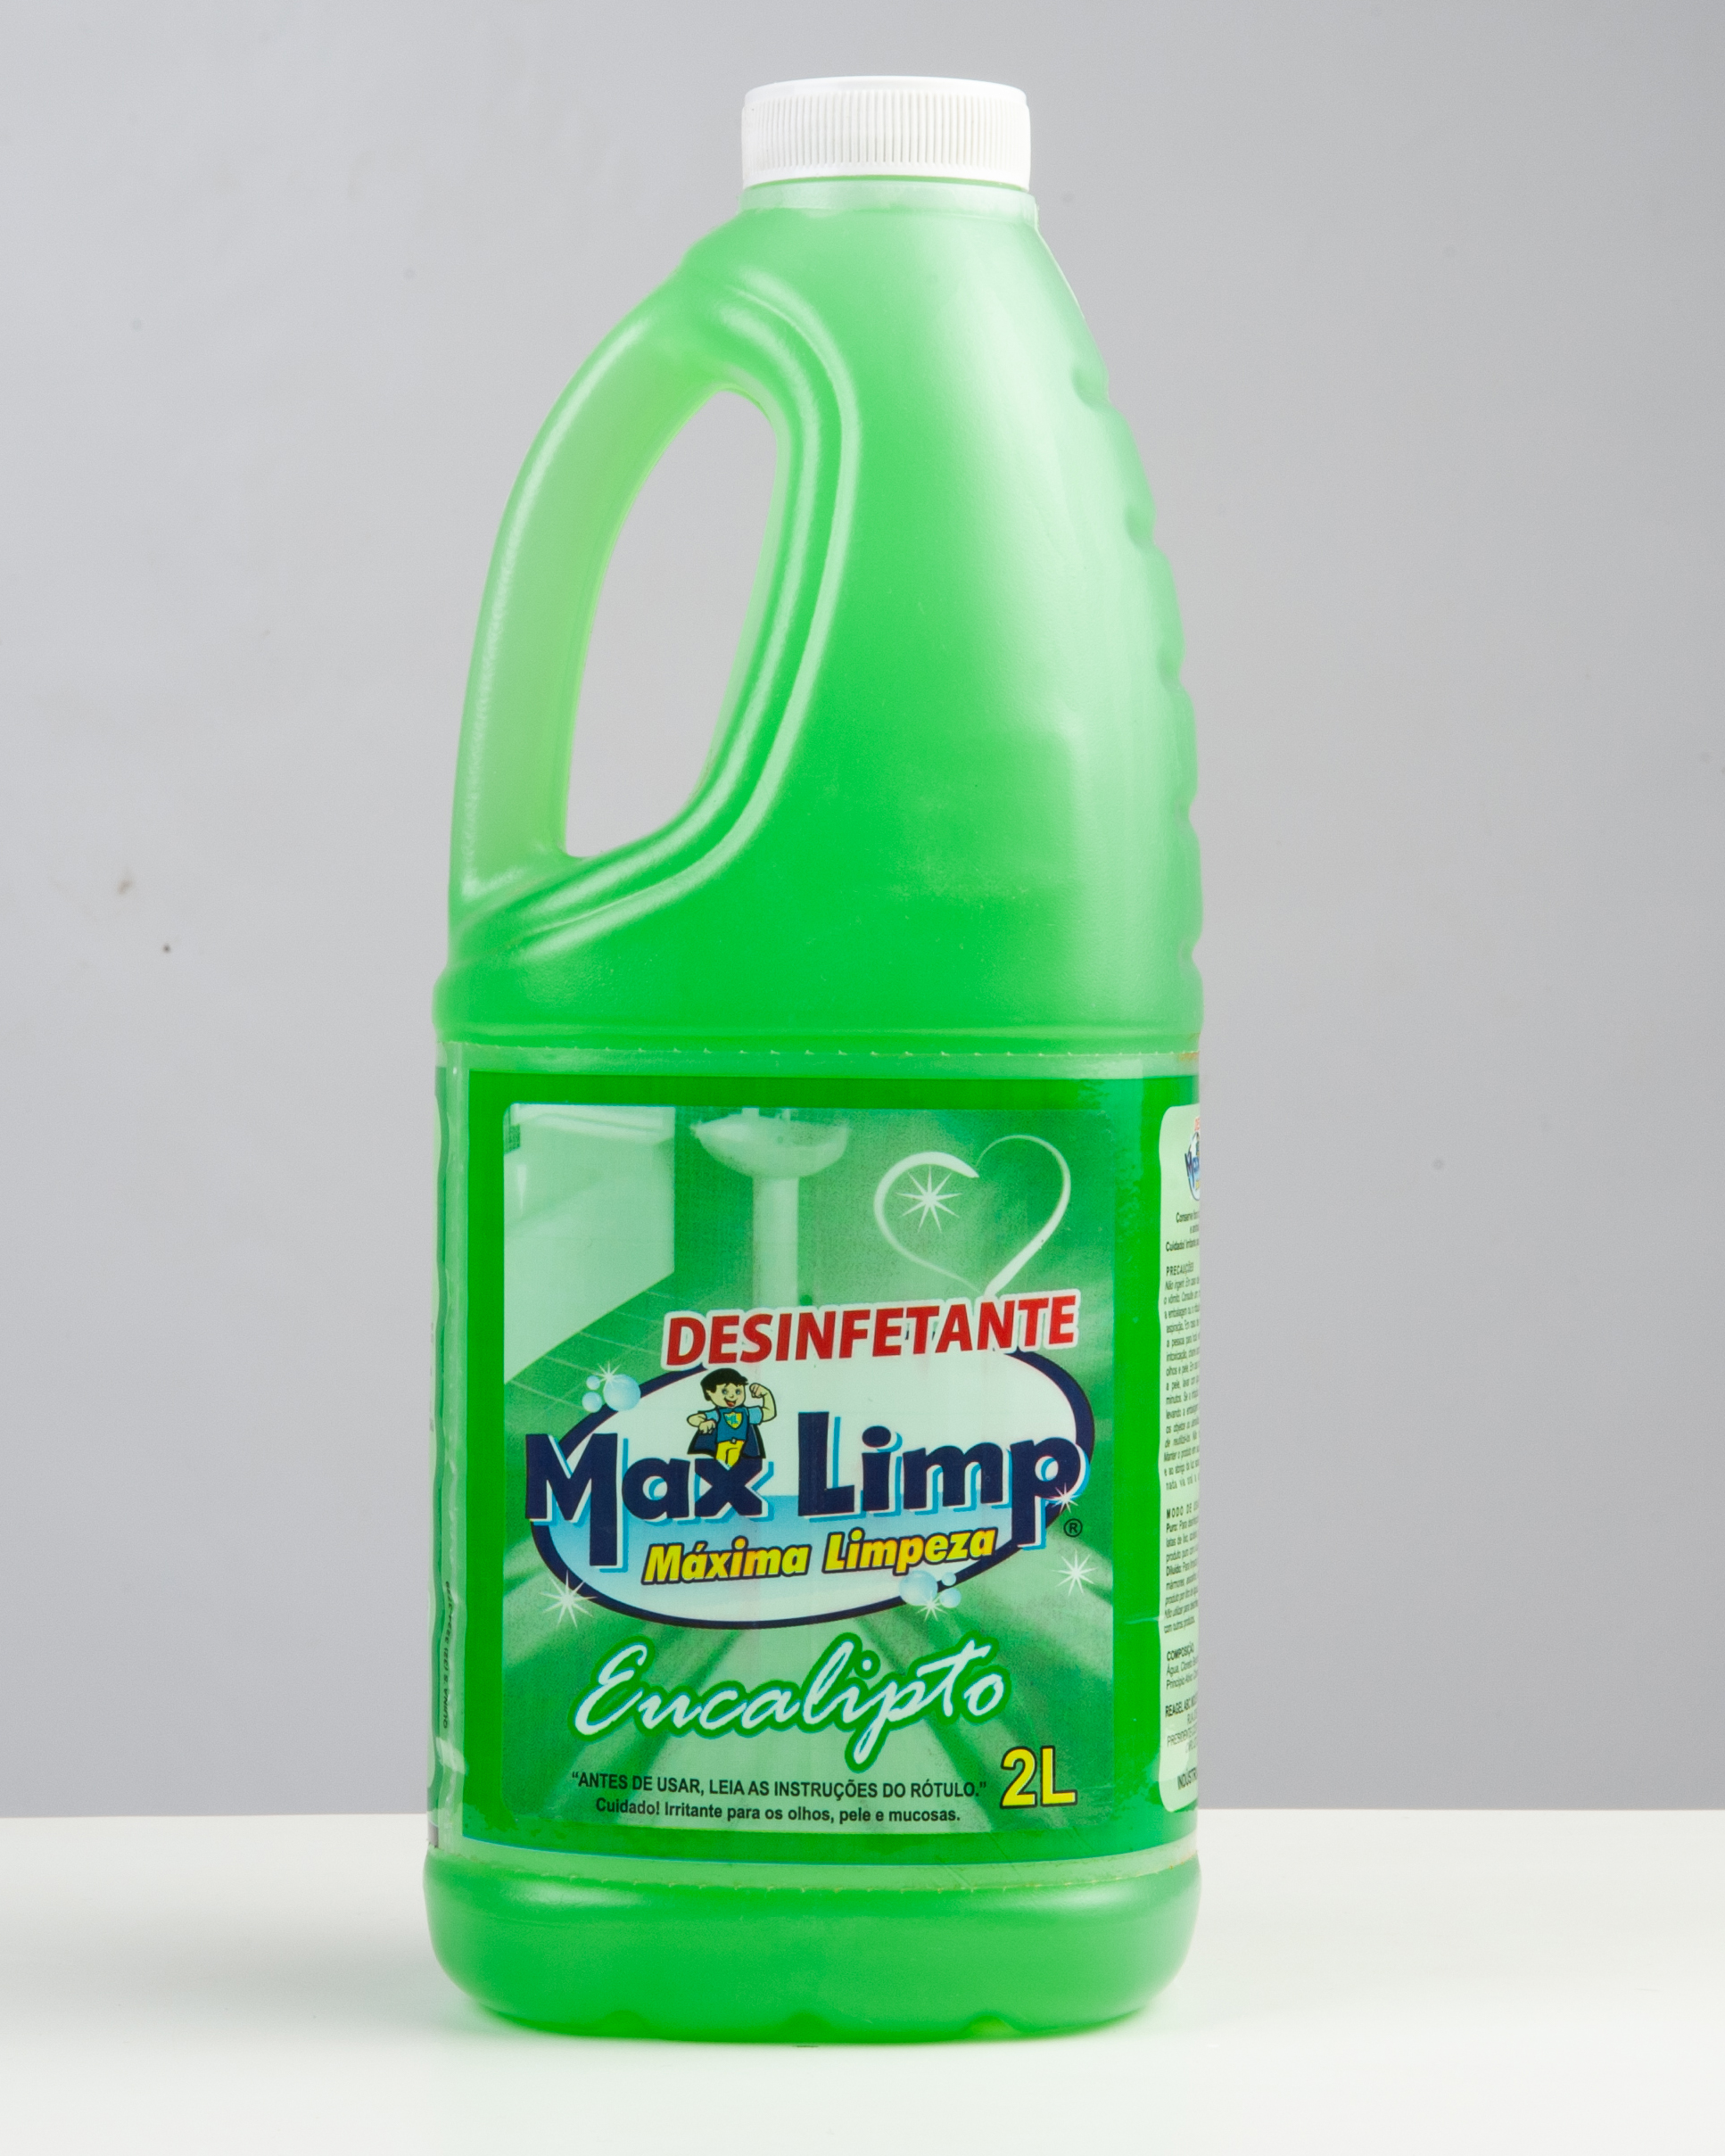 Desinfetante MaxLimp Eucalipto